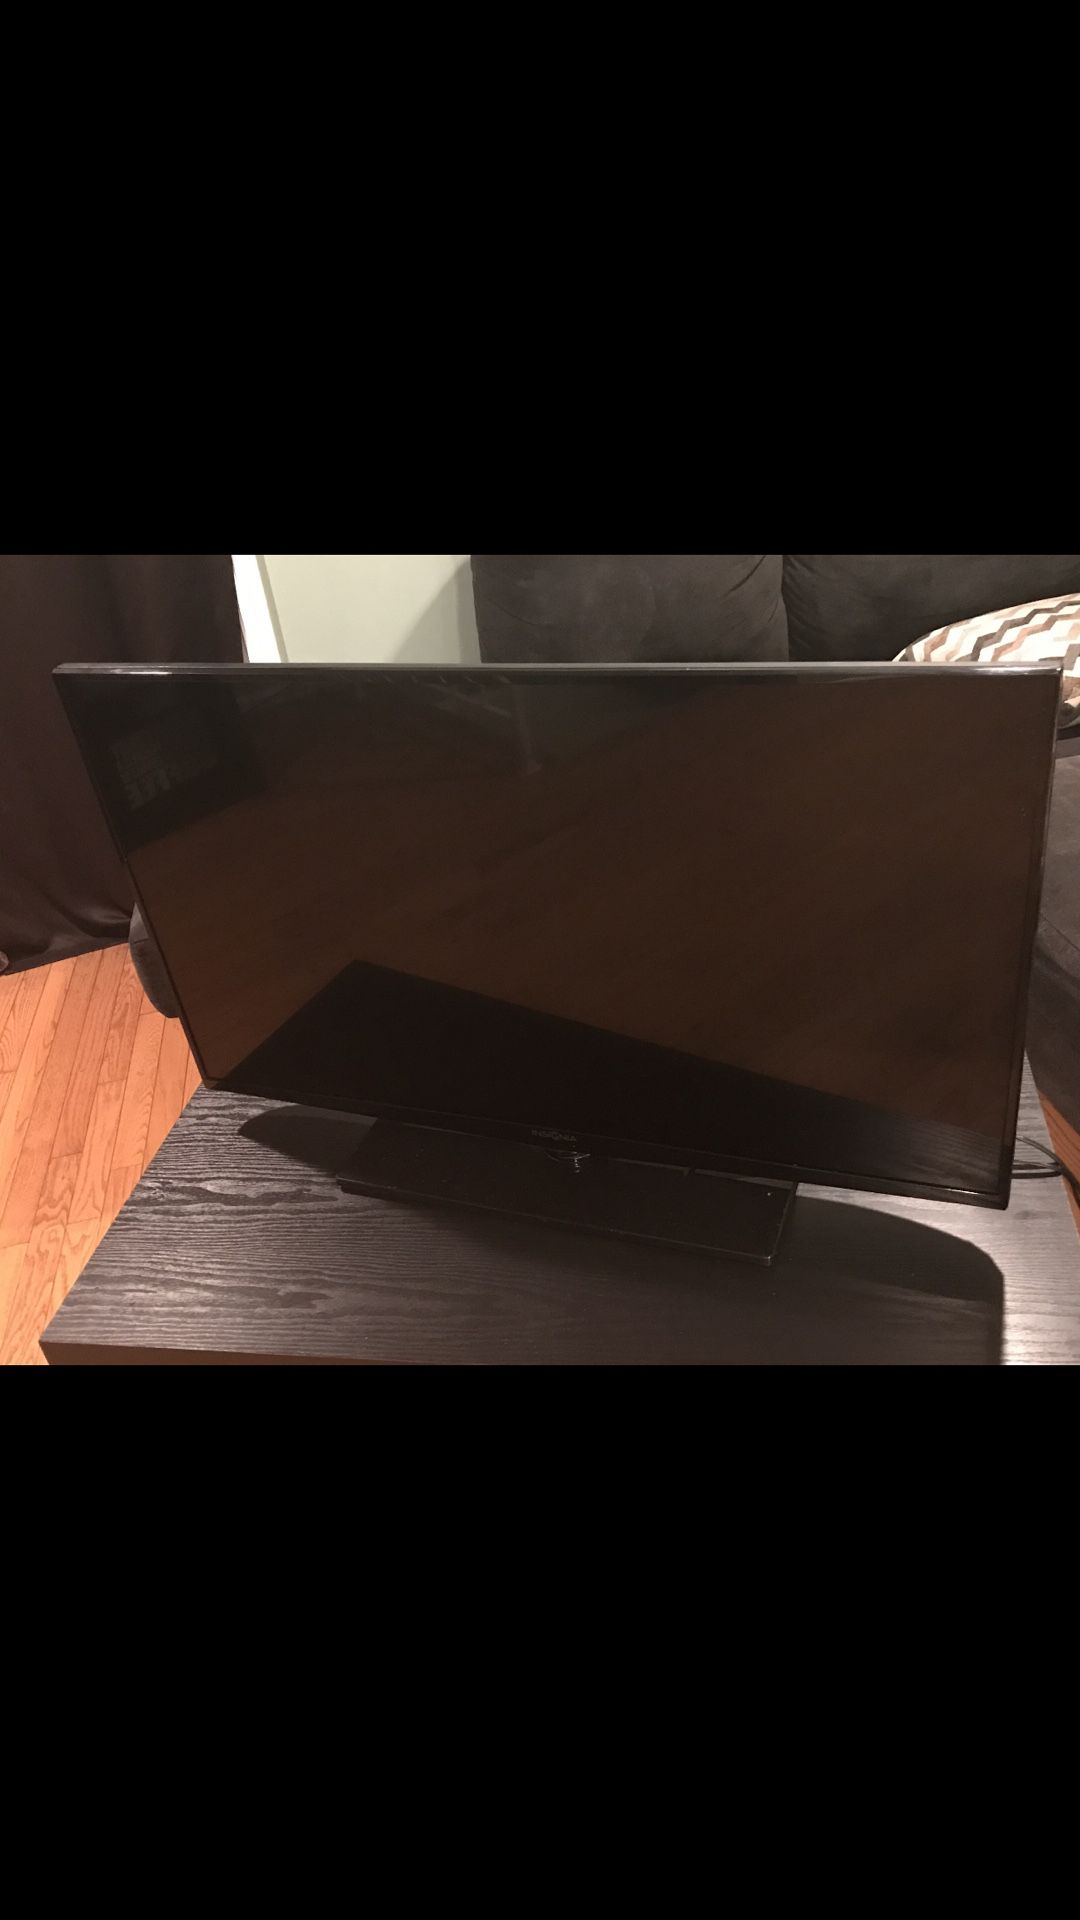 Insignia 42” Black Flat Screen LED TV. $120 OBO